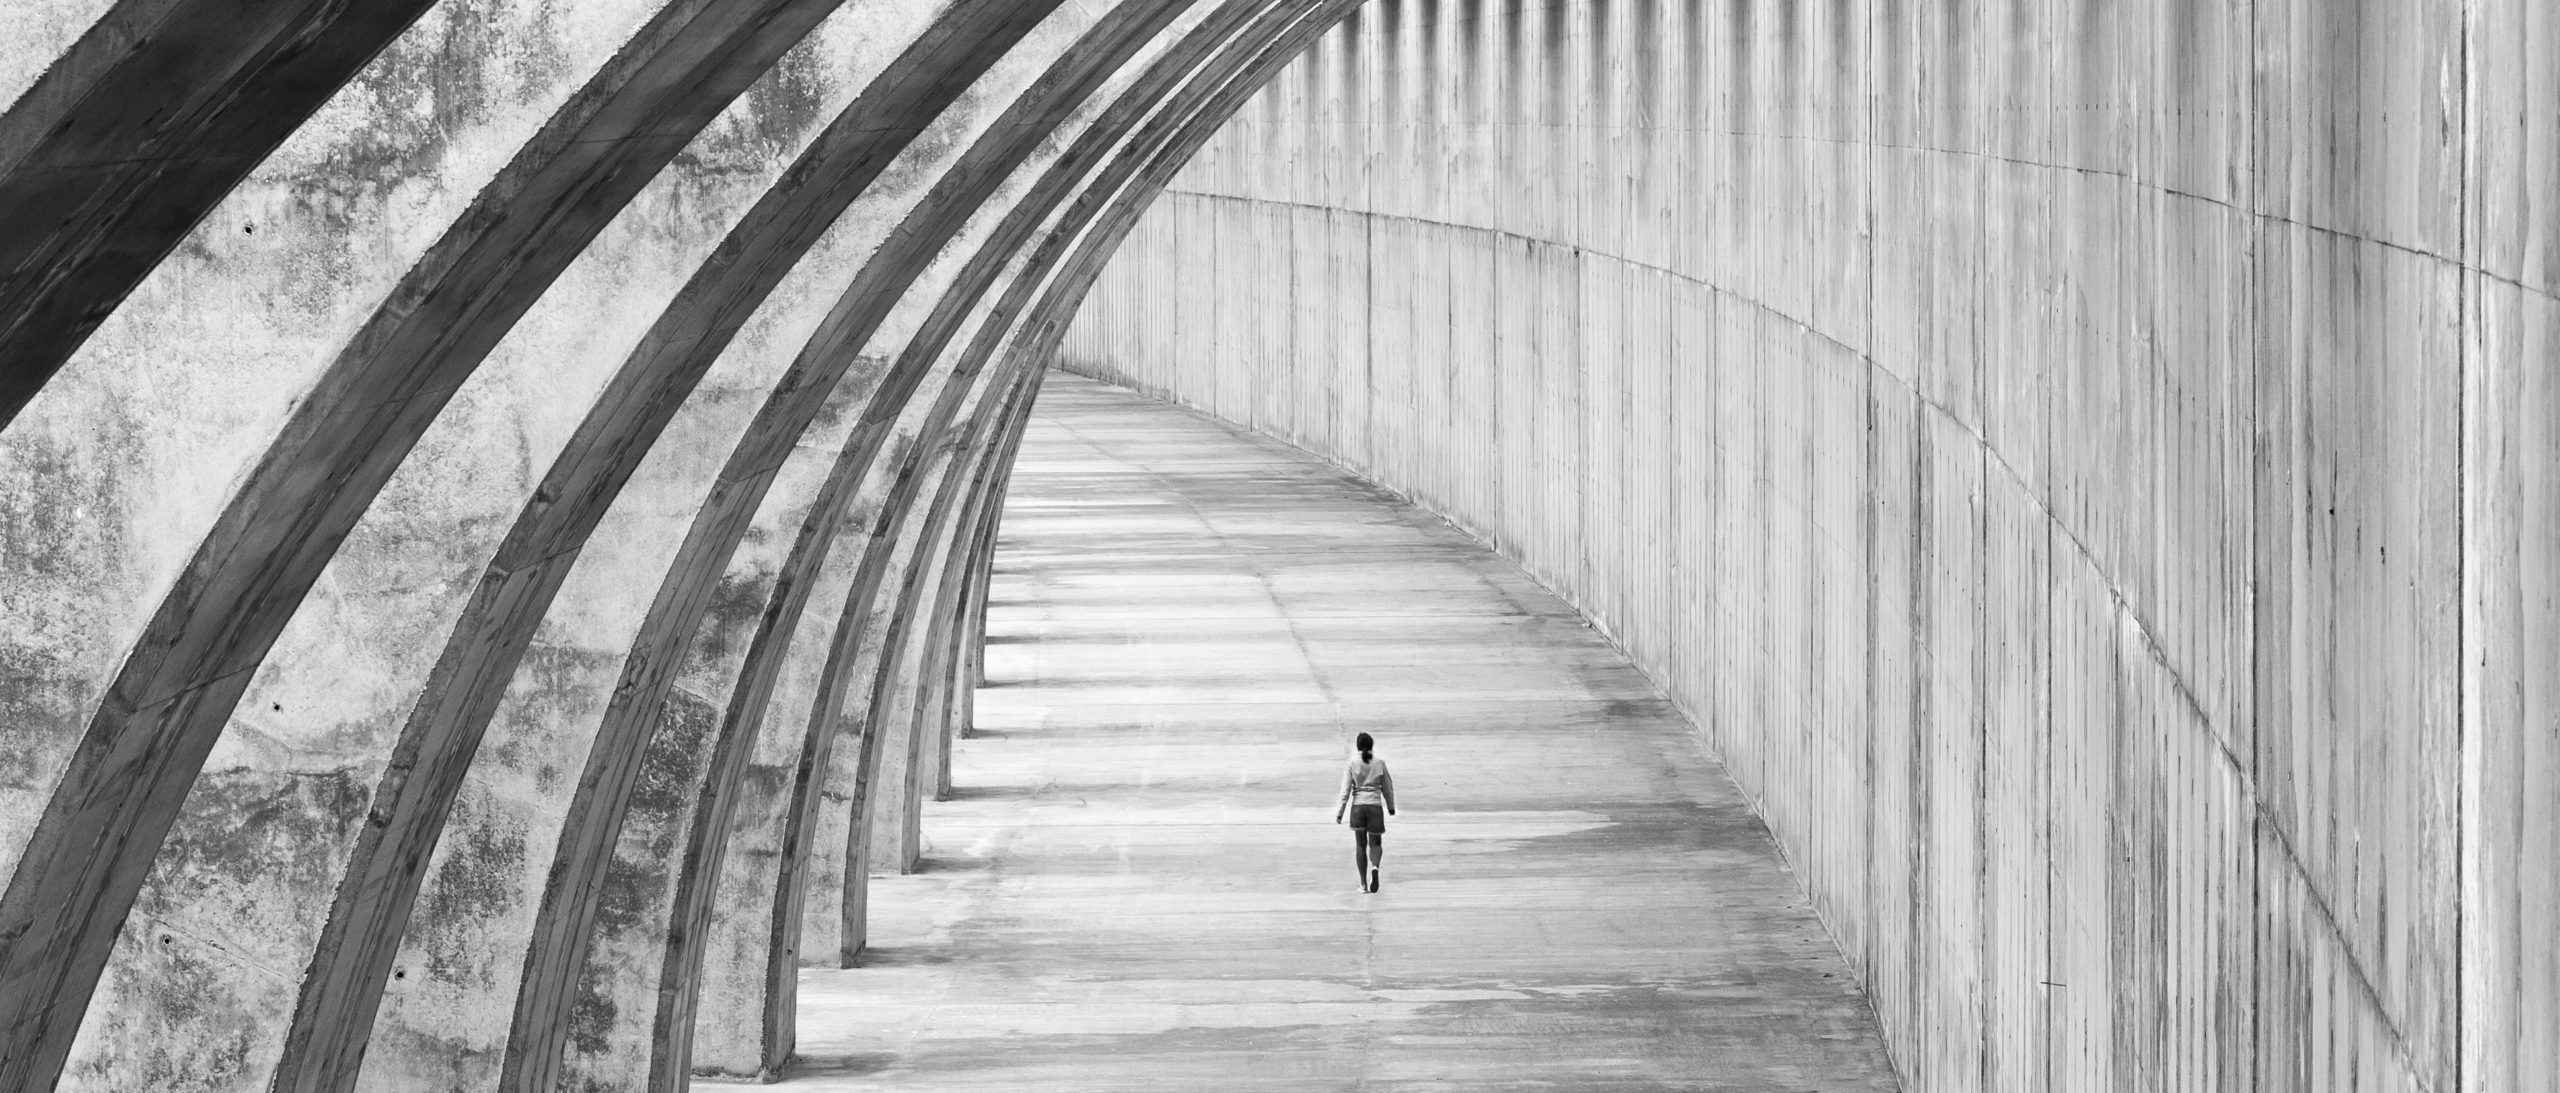 A person walks along an enclosed bridge.